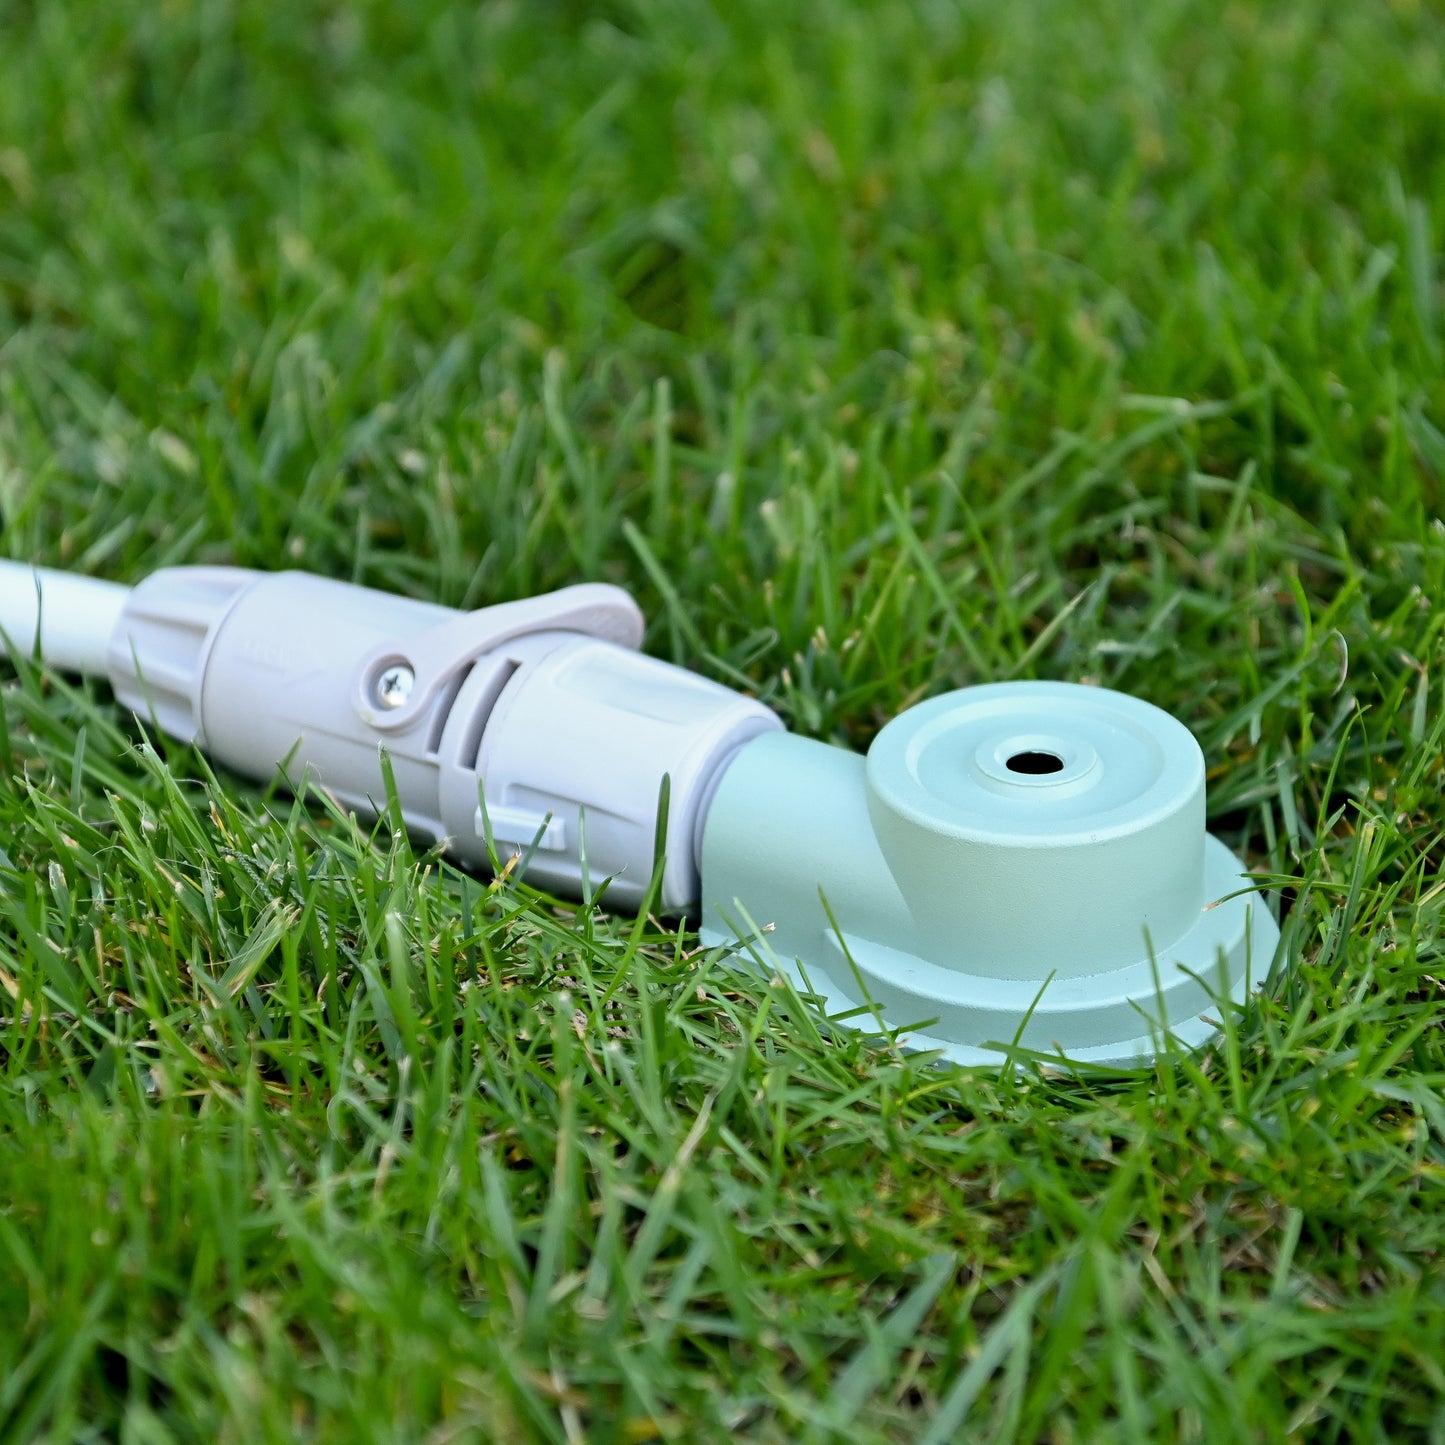 round sprinkler on green grass